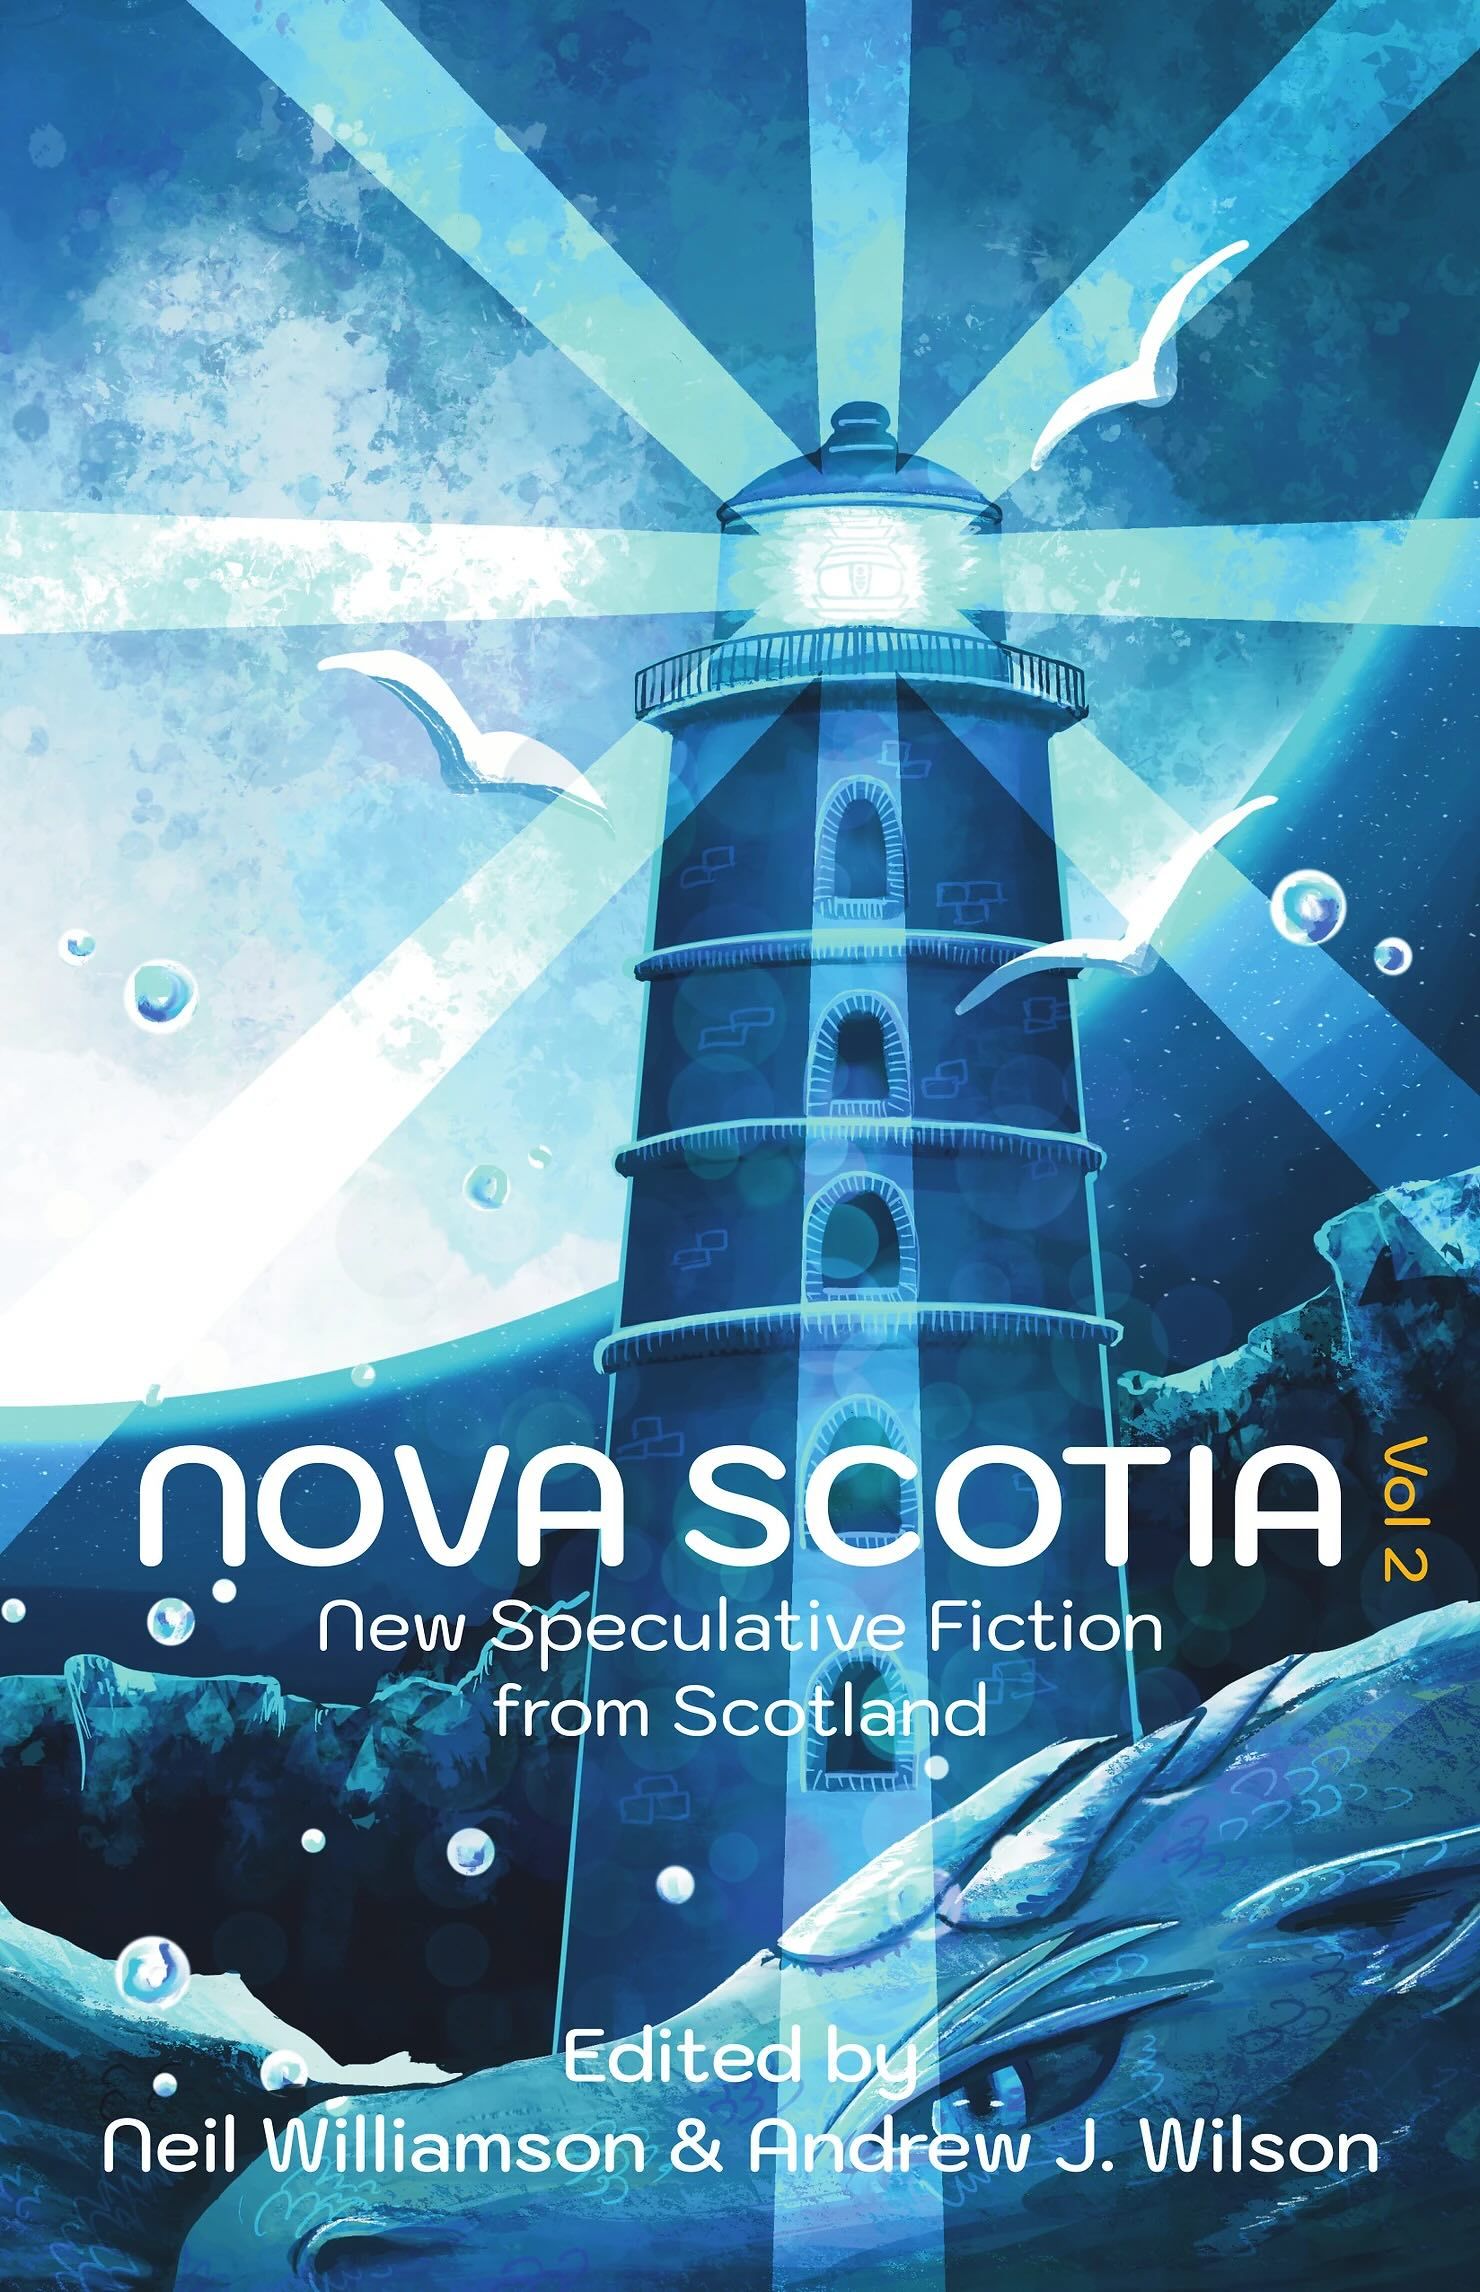 The cover for Nova Scotia: Volume 2